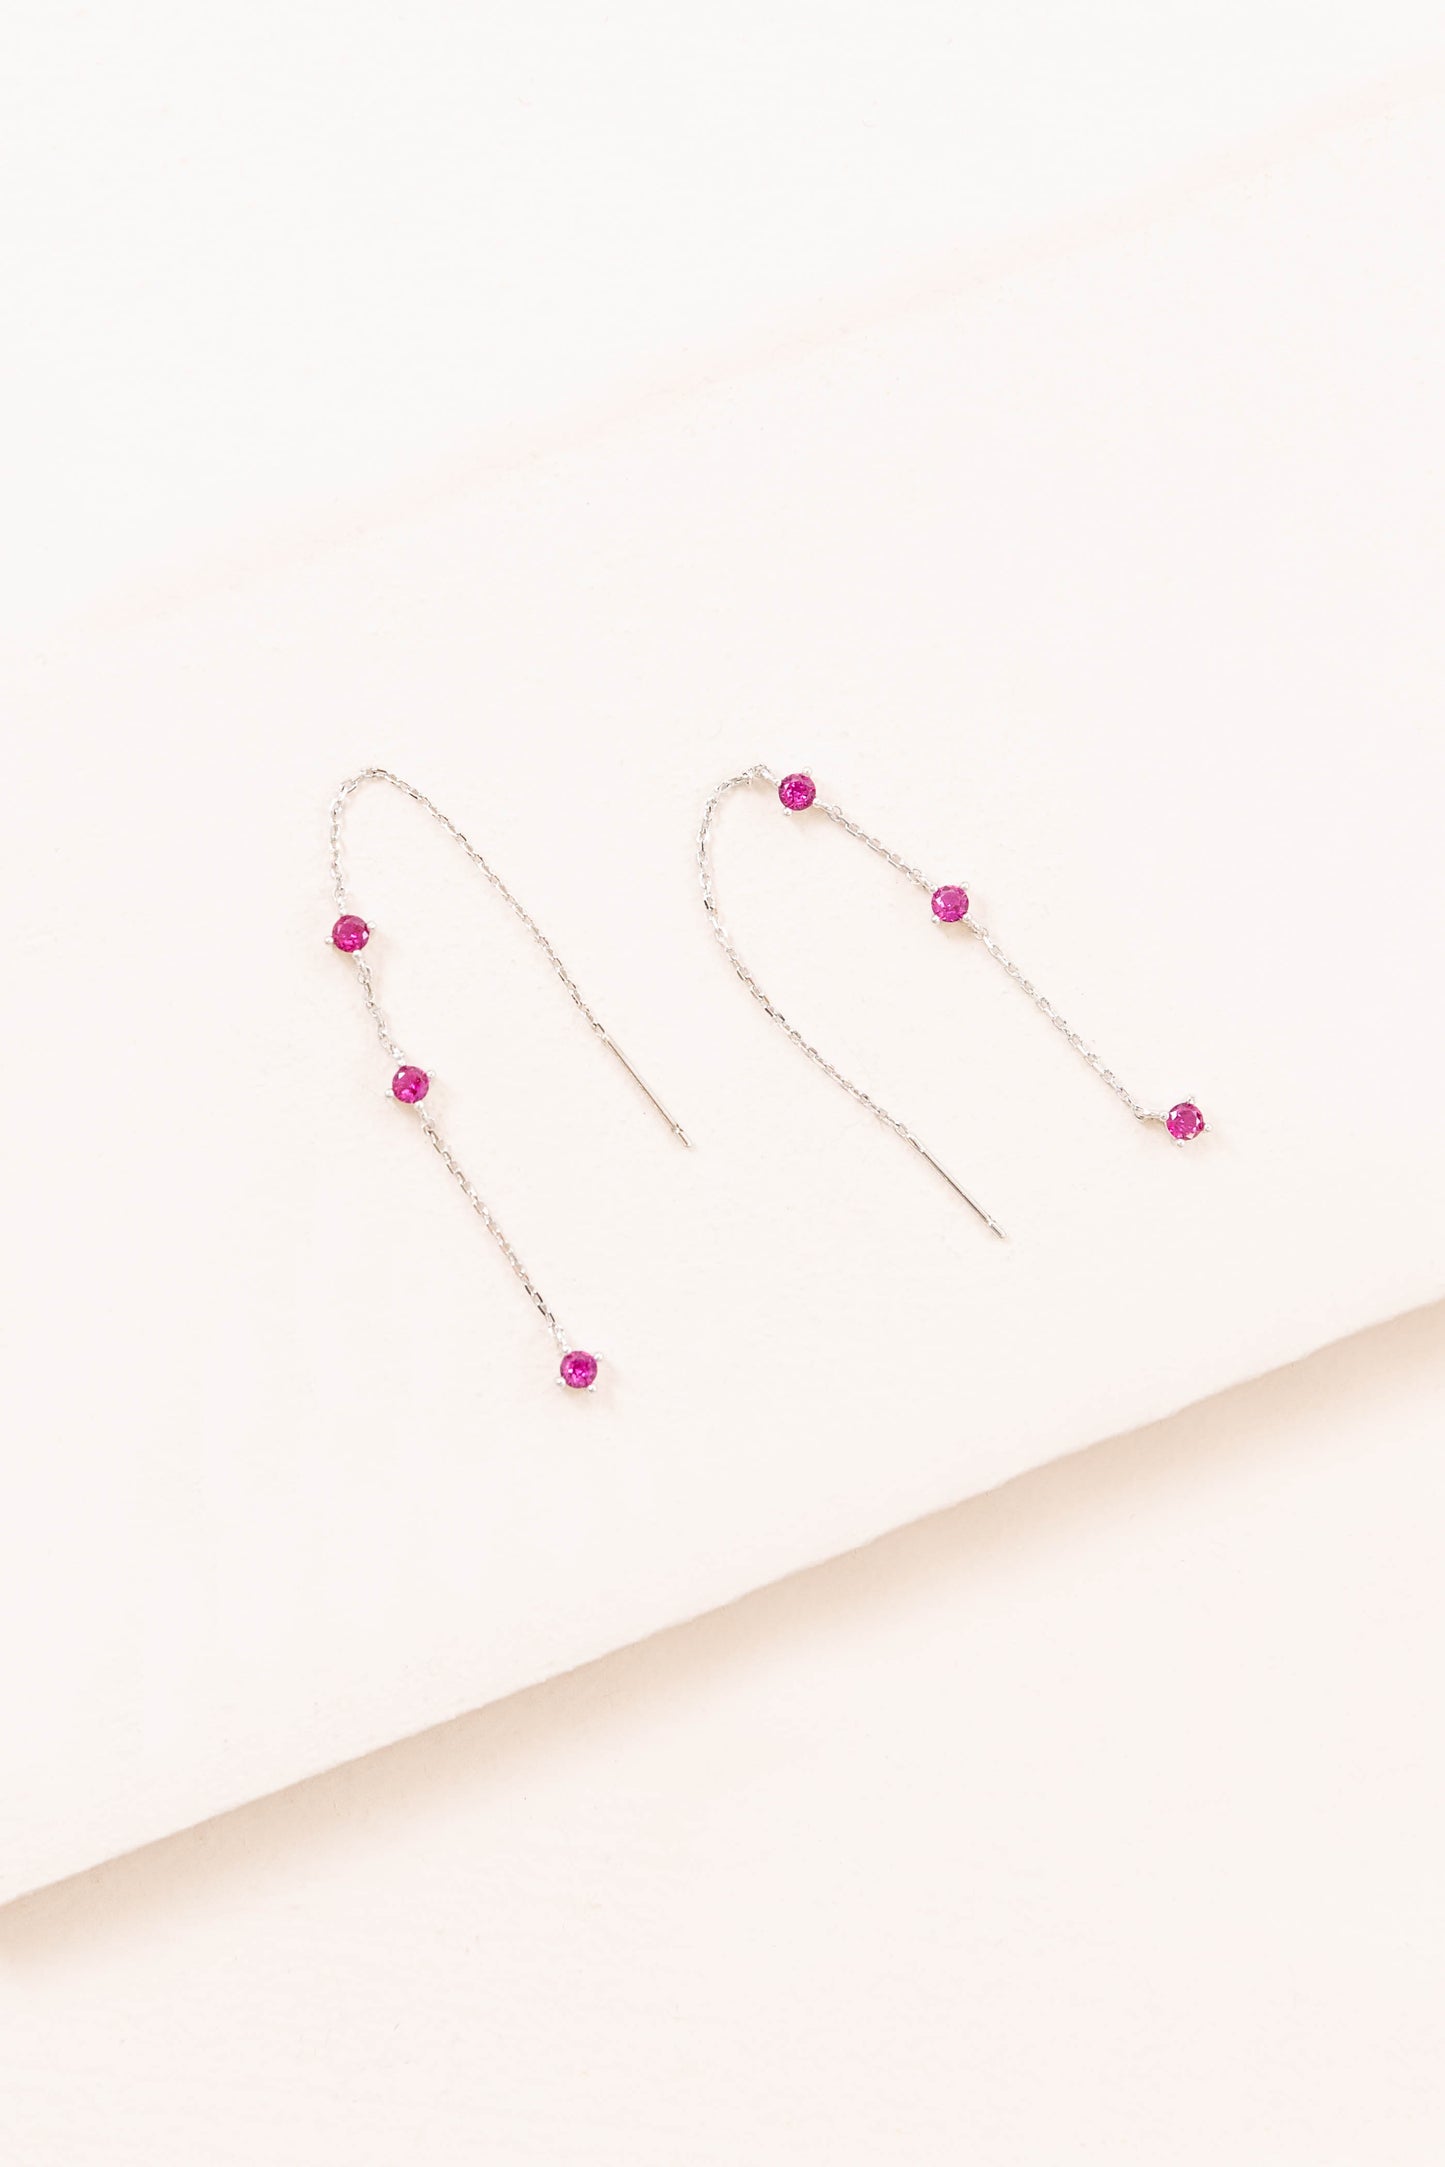 Think Pink Threader Earrings